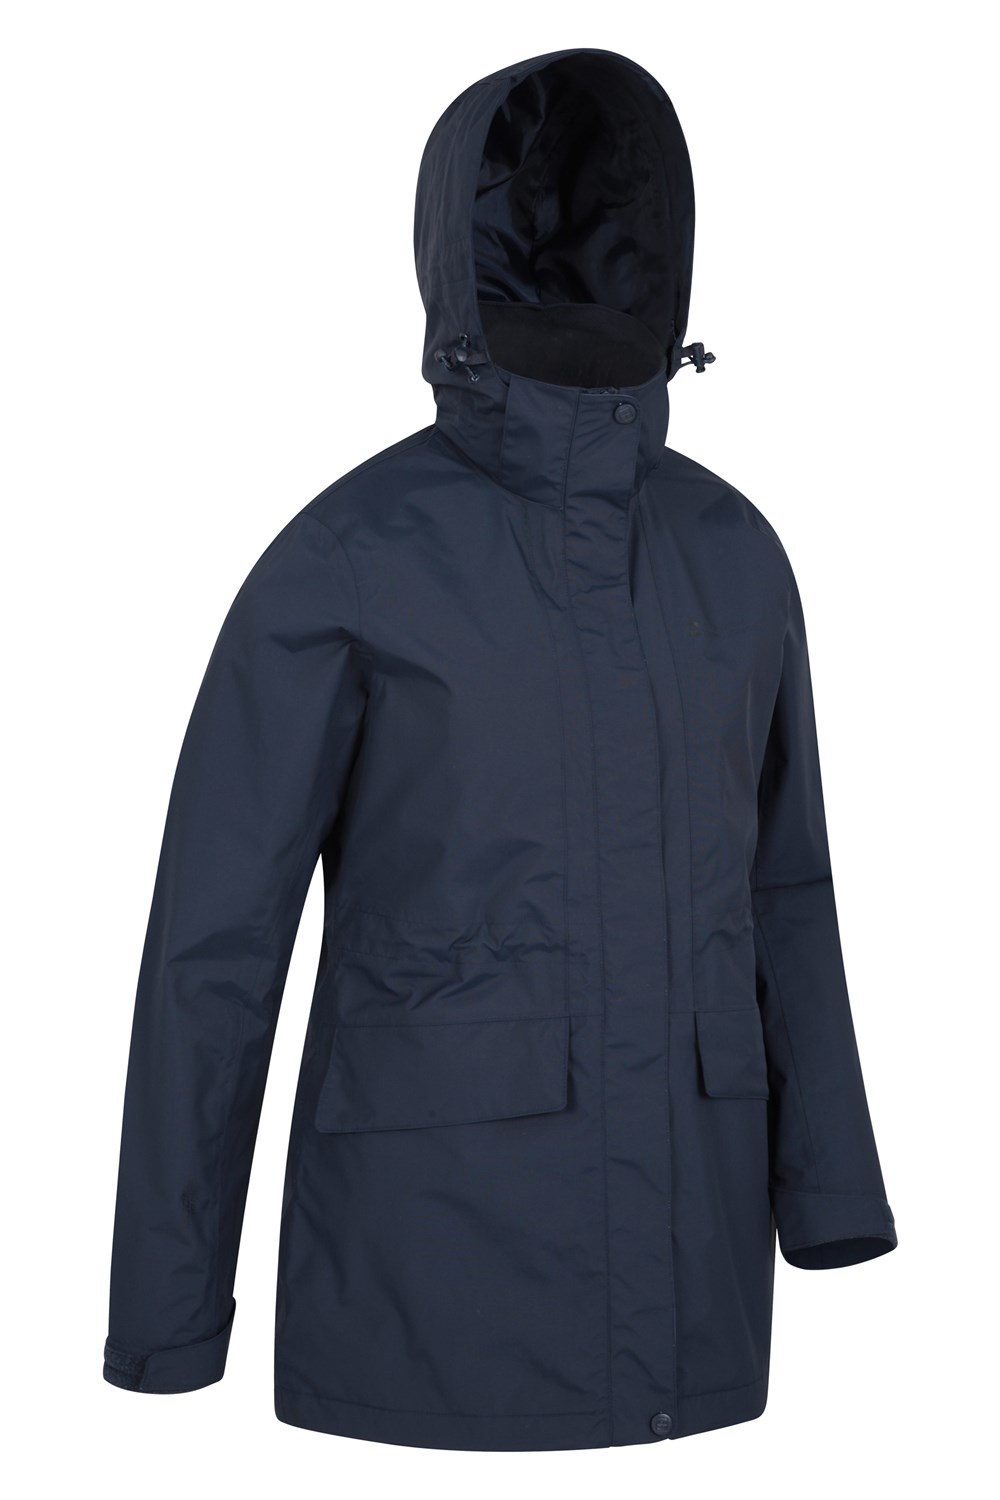 Mountain Warehouse Long Ladies Waterproof Jacket Detachable Hood Coat ...